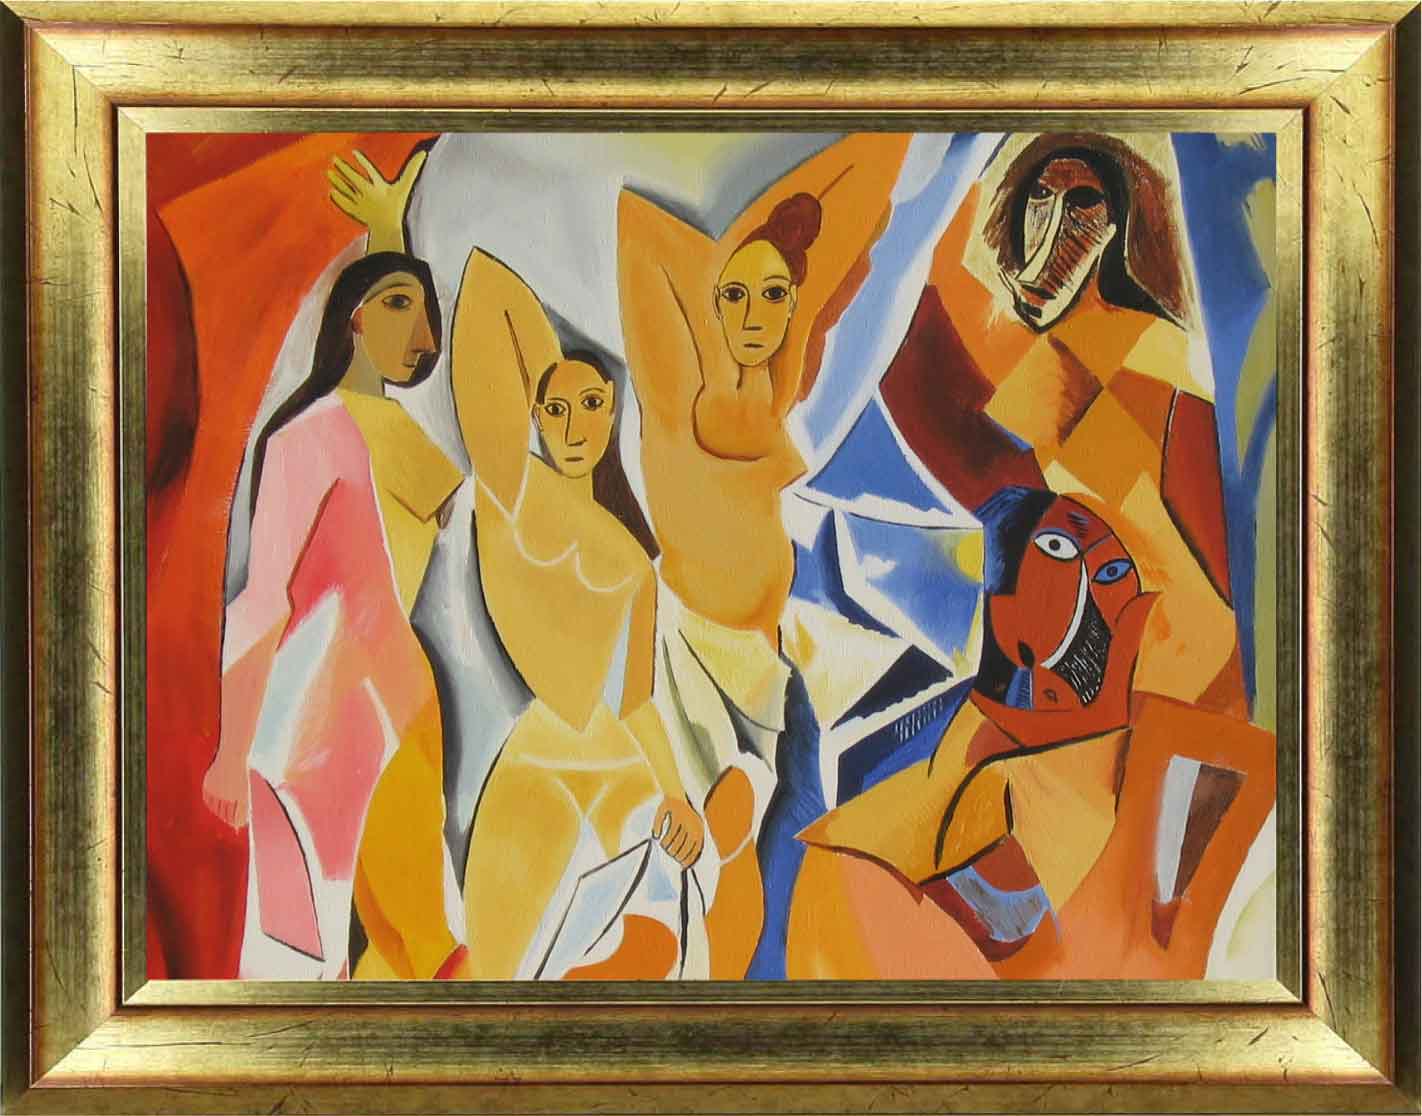 Wandtattoo malerei Picasso – Les Demoiselles d'Avignon - Wandtattoo Riesen- Aufkleber Plakat - ambiance-sticker